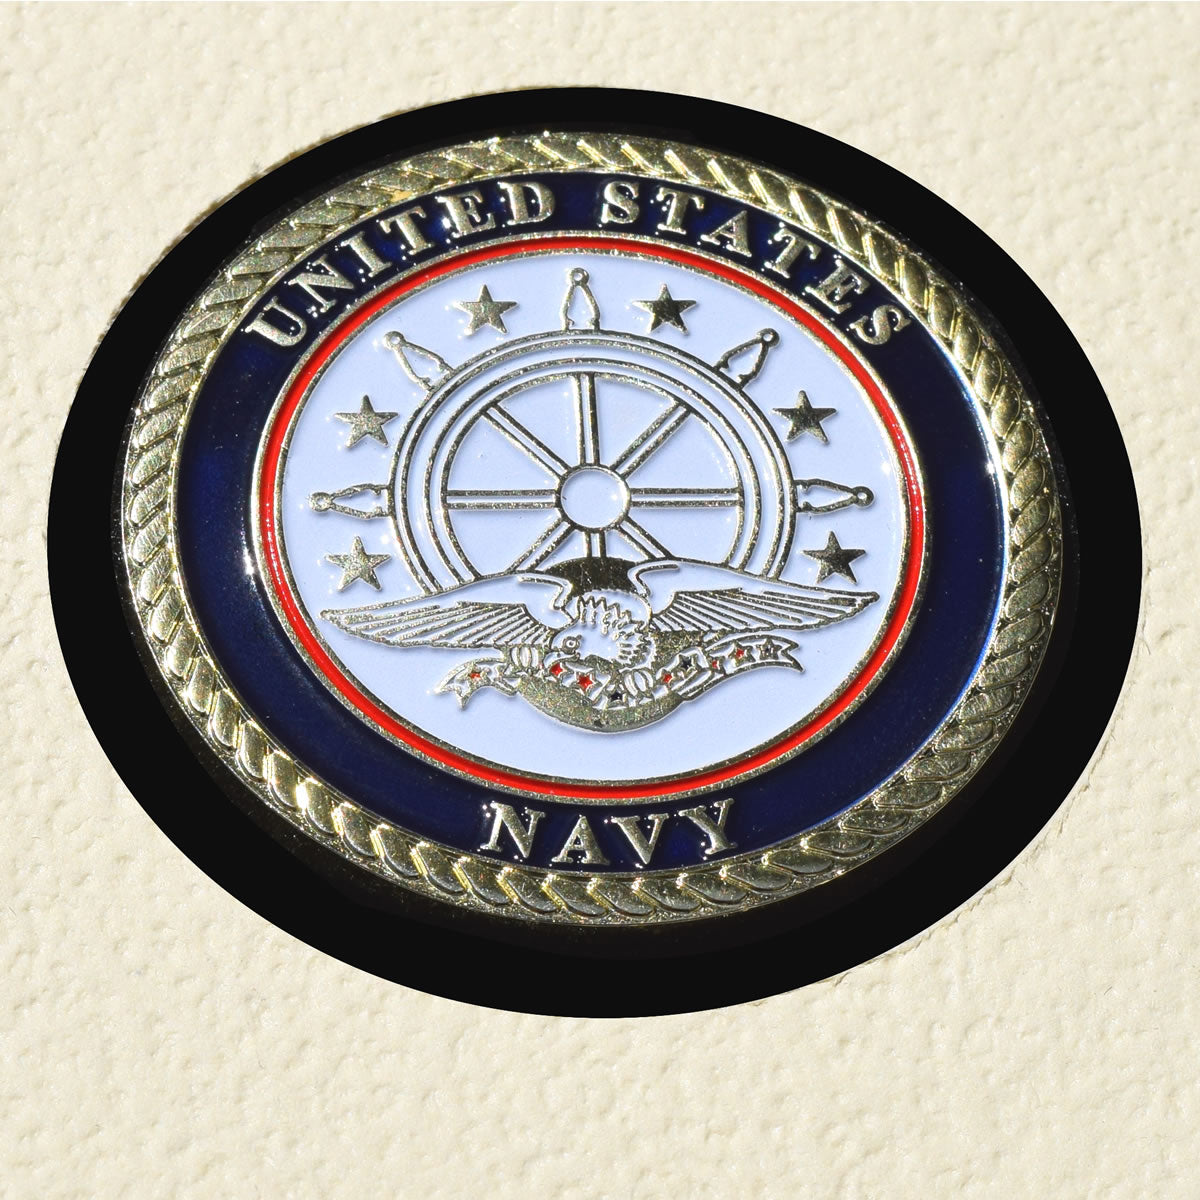 USS ARCTIC T-AOE-8 Detailed Coin